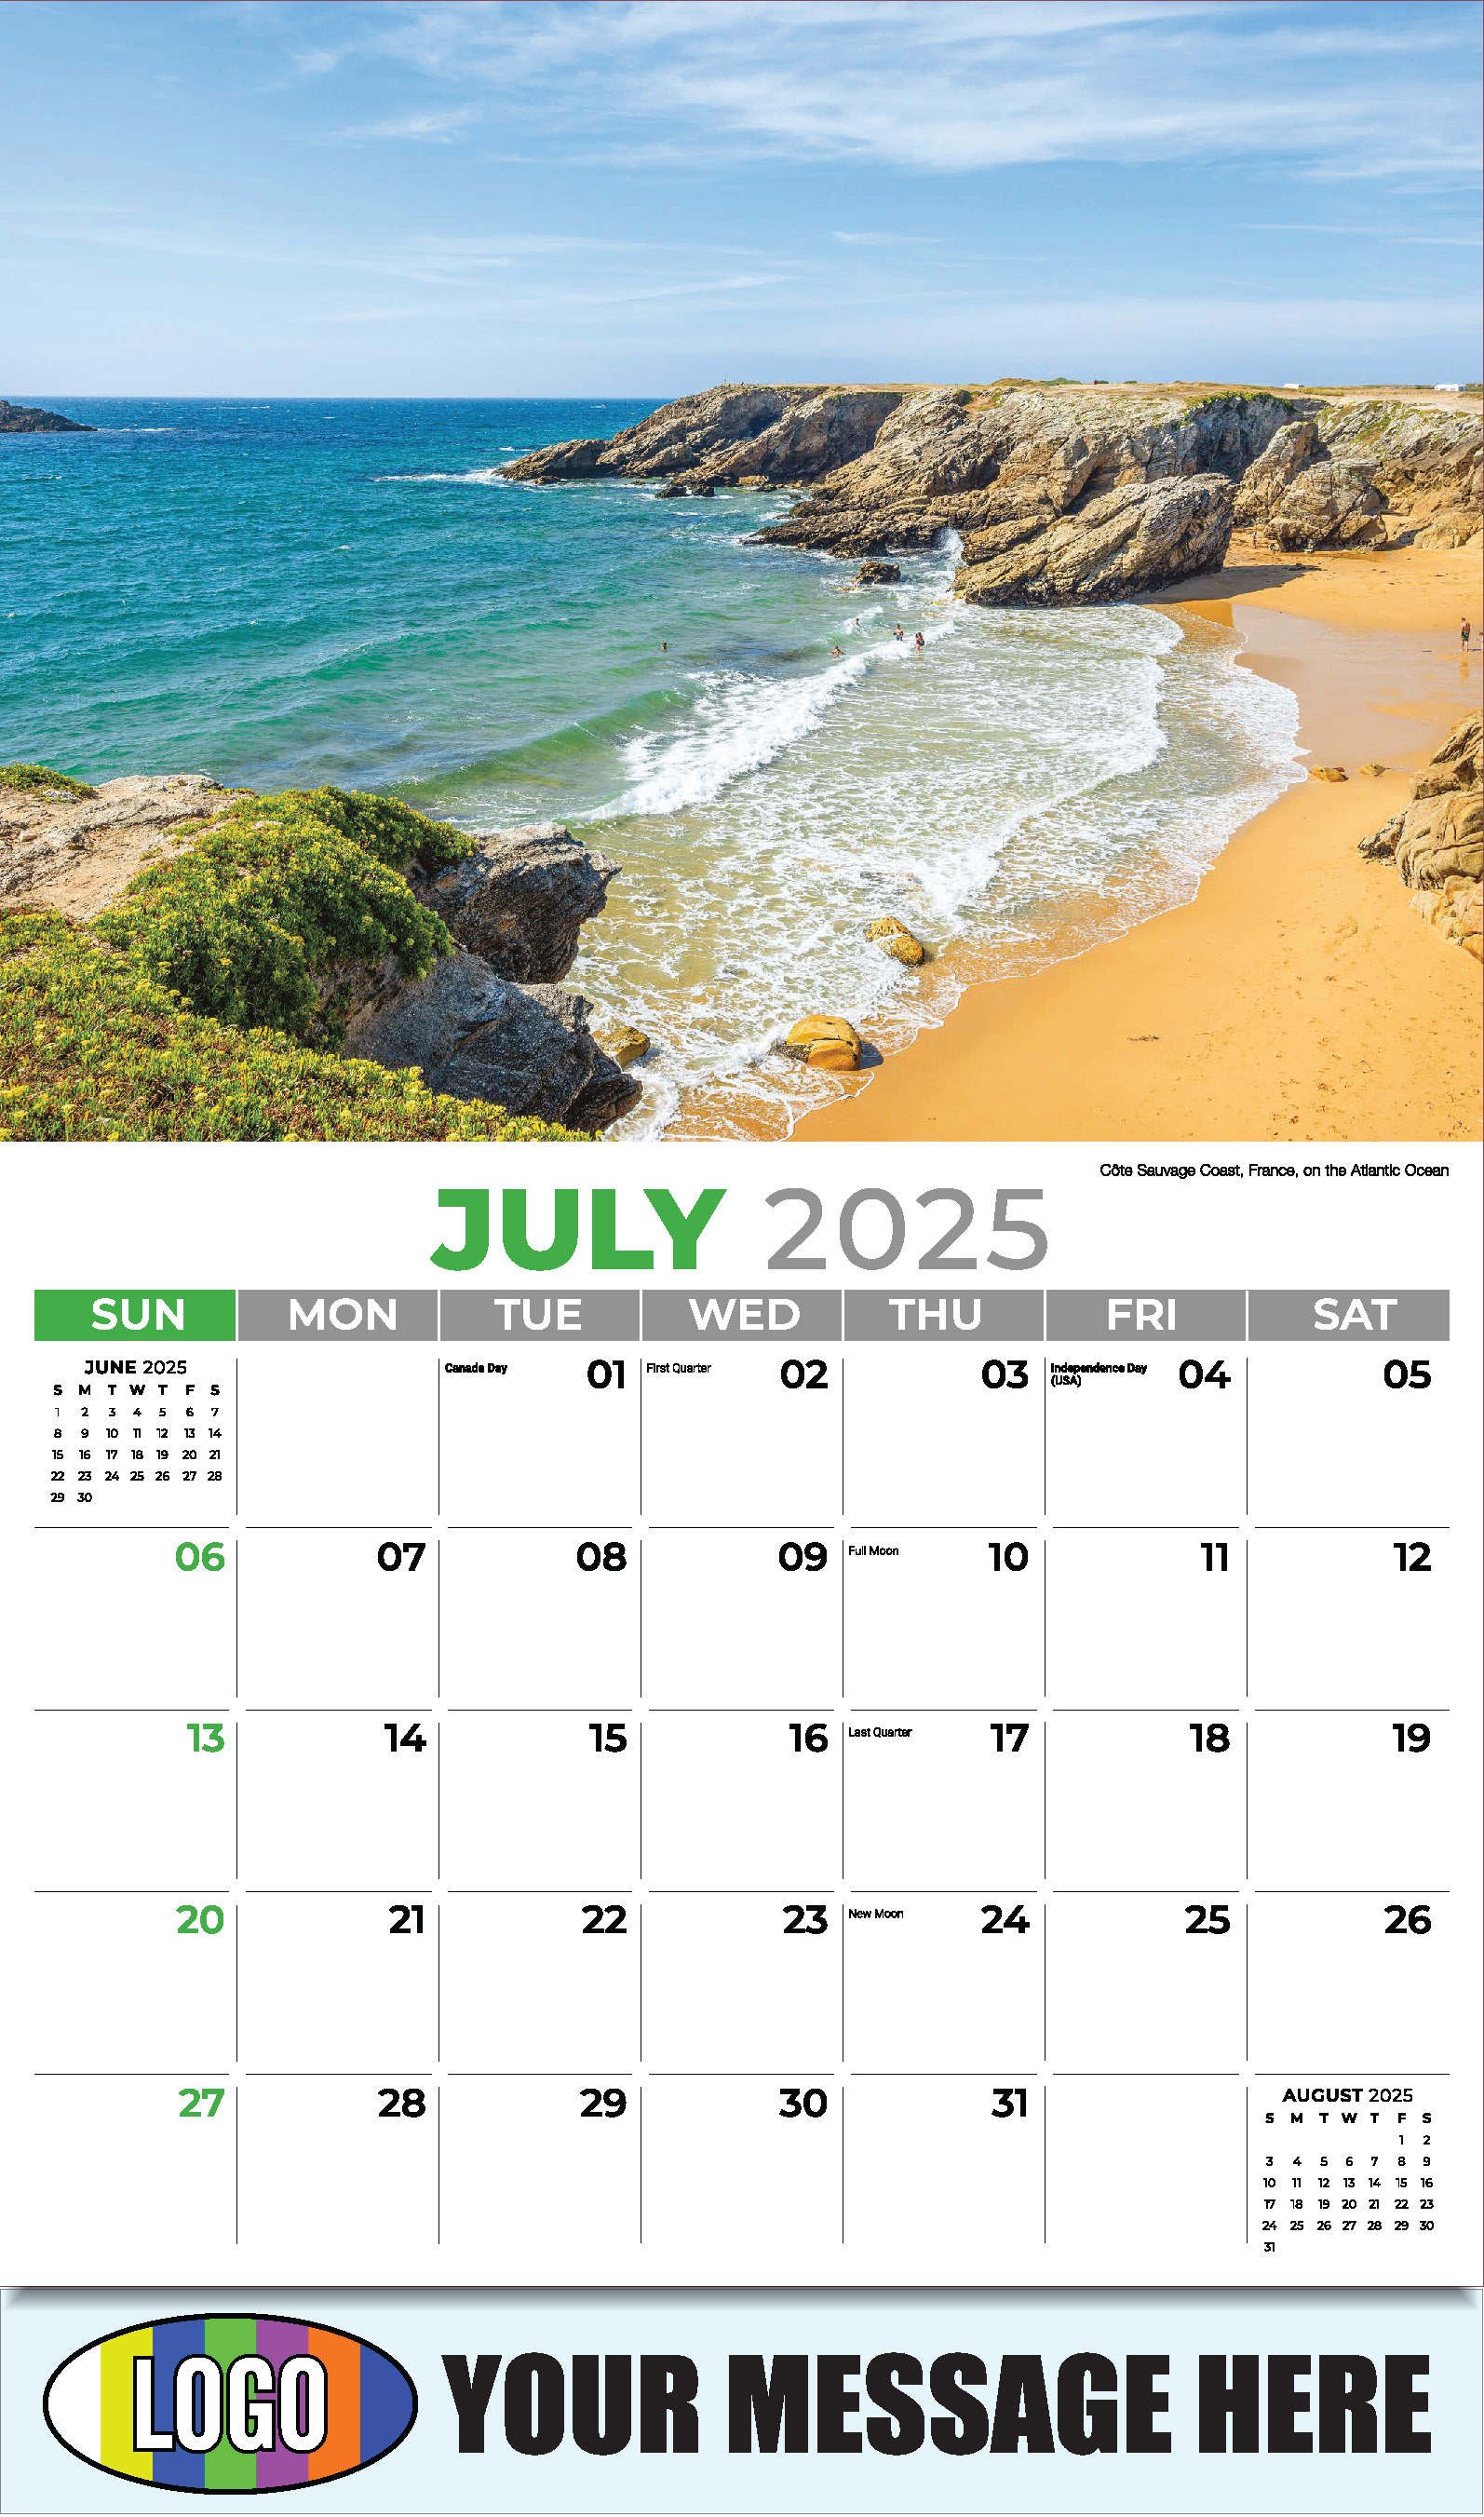 Sun, Sand and Surf 2025 Business Advertsing Wall Calendar - July